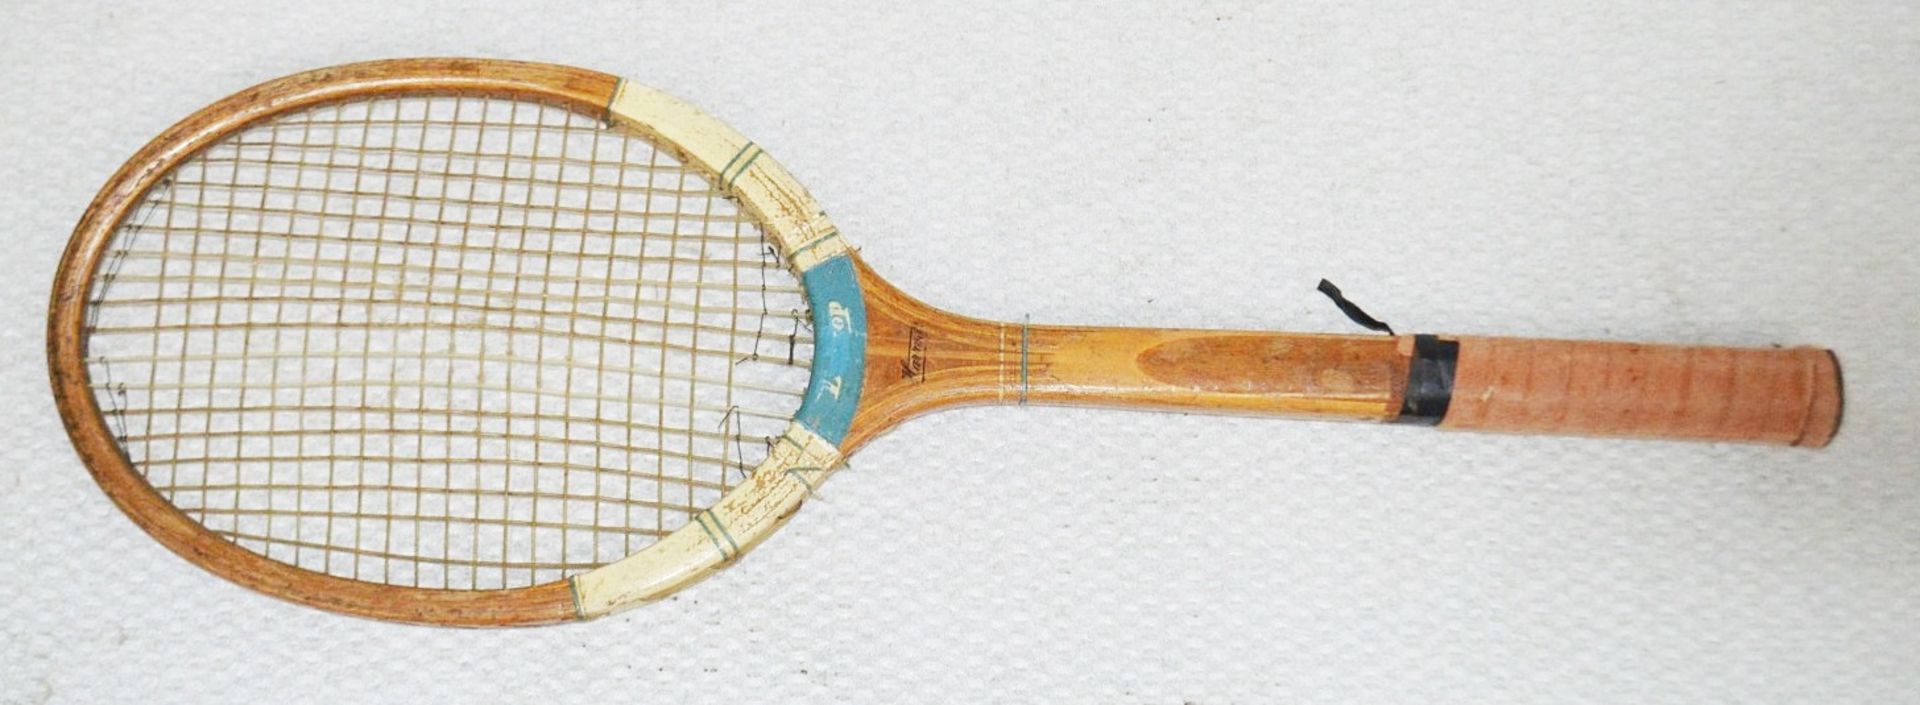 5 x Assorted Vintage Tennis Rackets - Ex-Display Props - Average Length: 69cm - Ref: HAR243 GIT - - Image 12 of 12